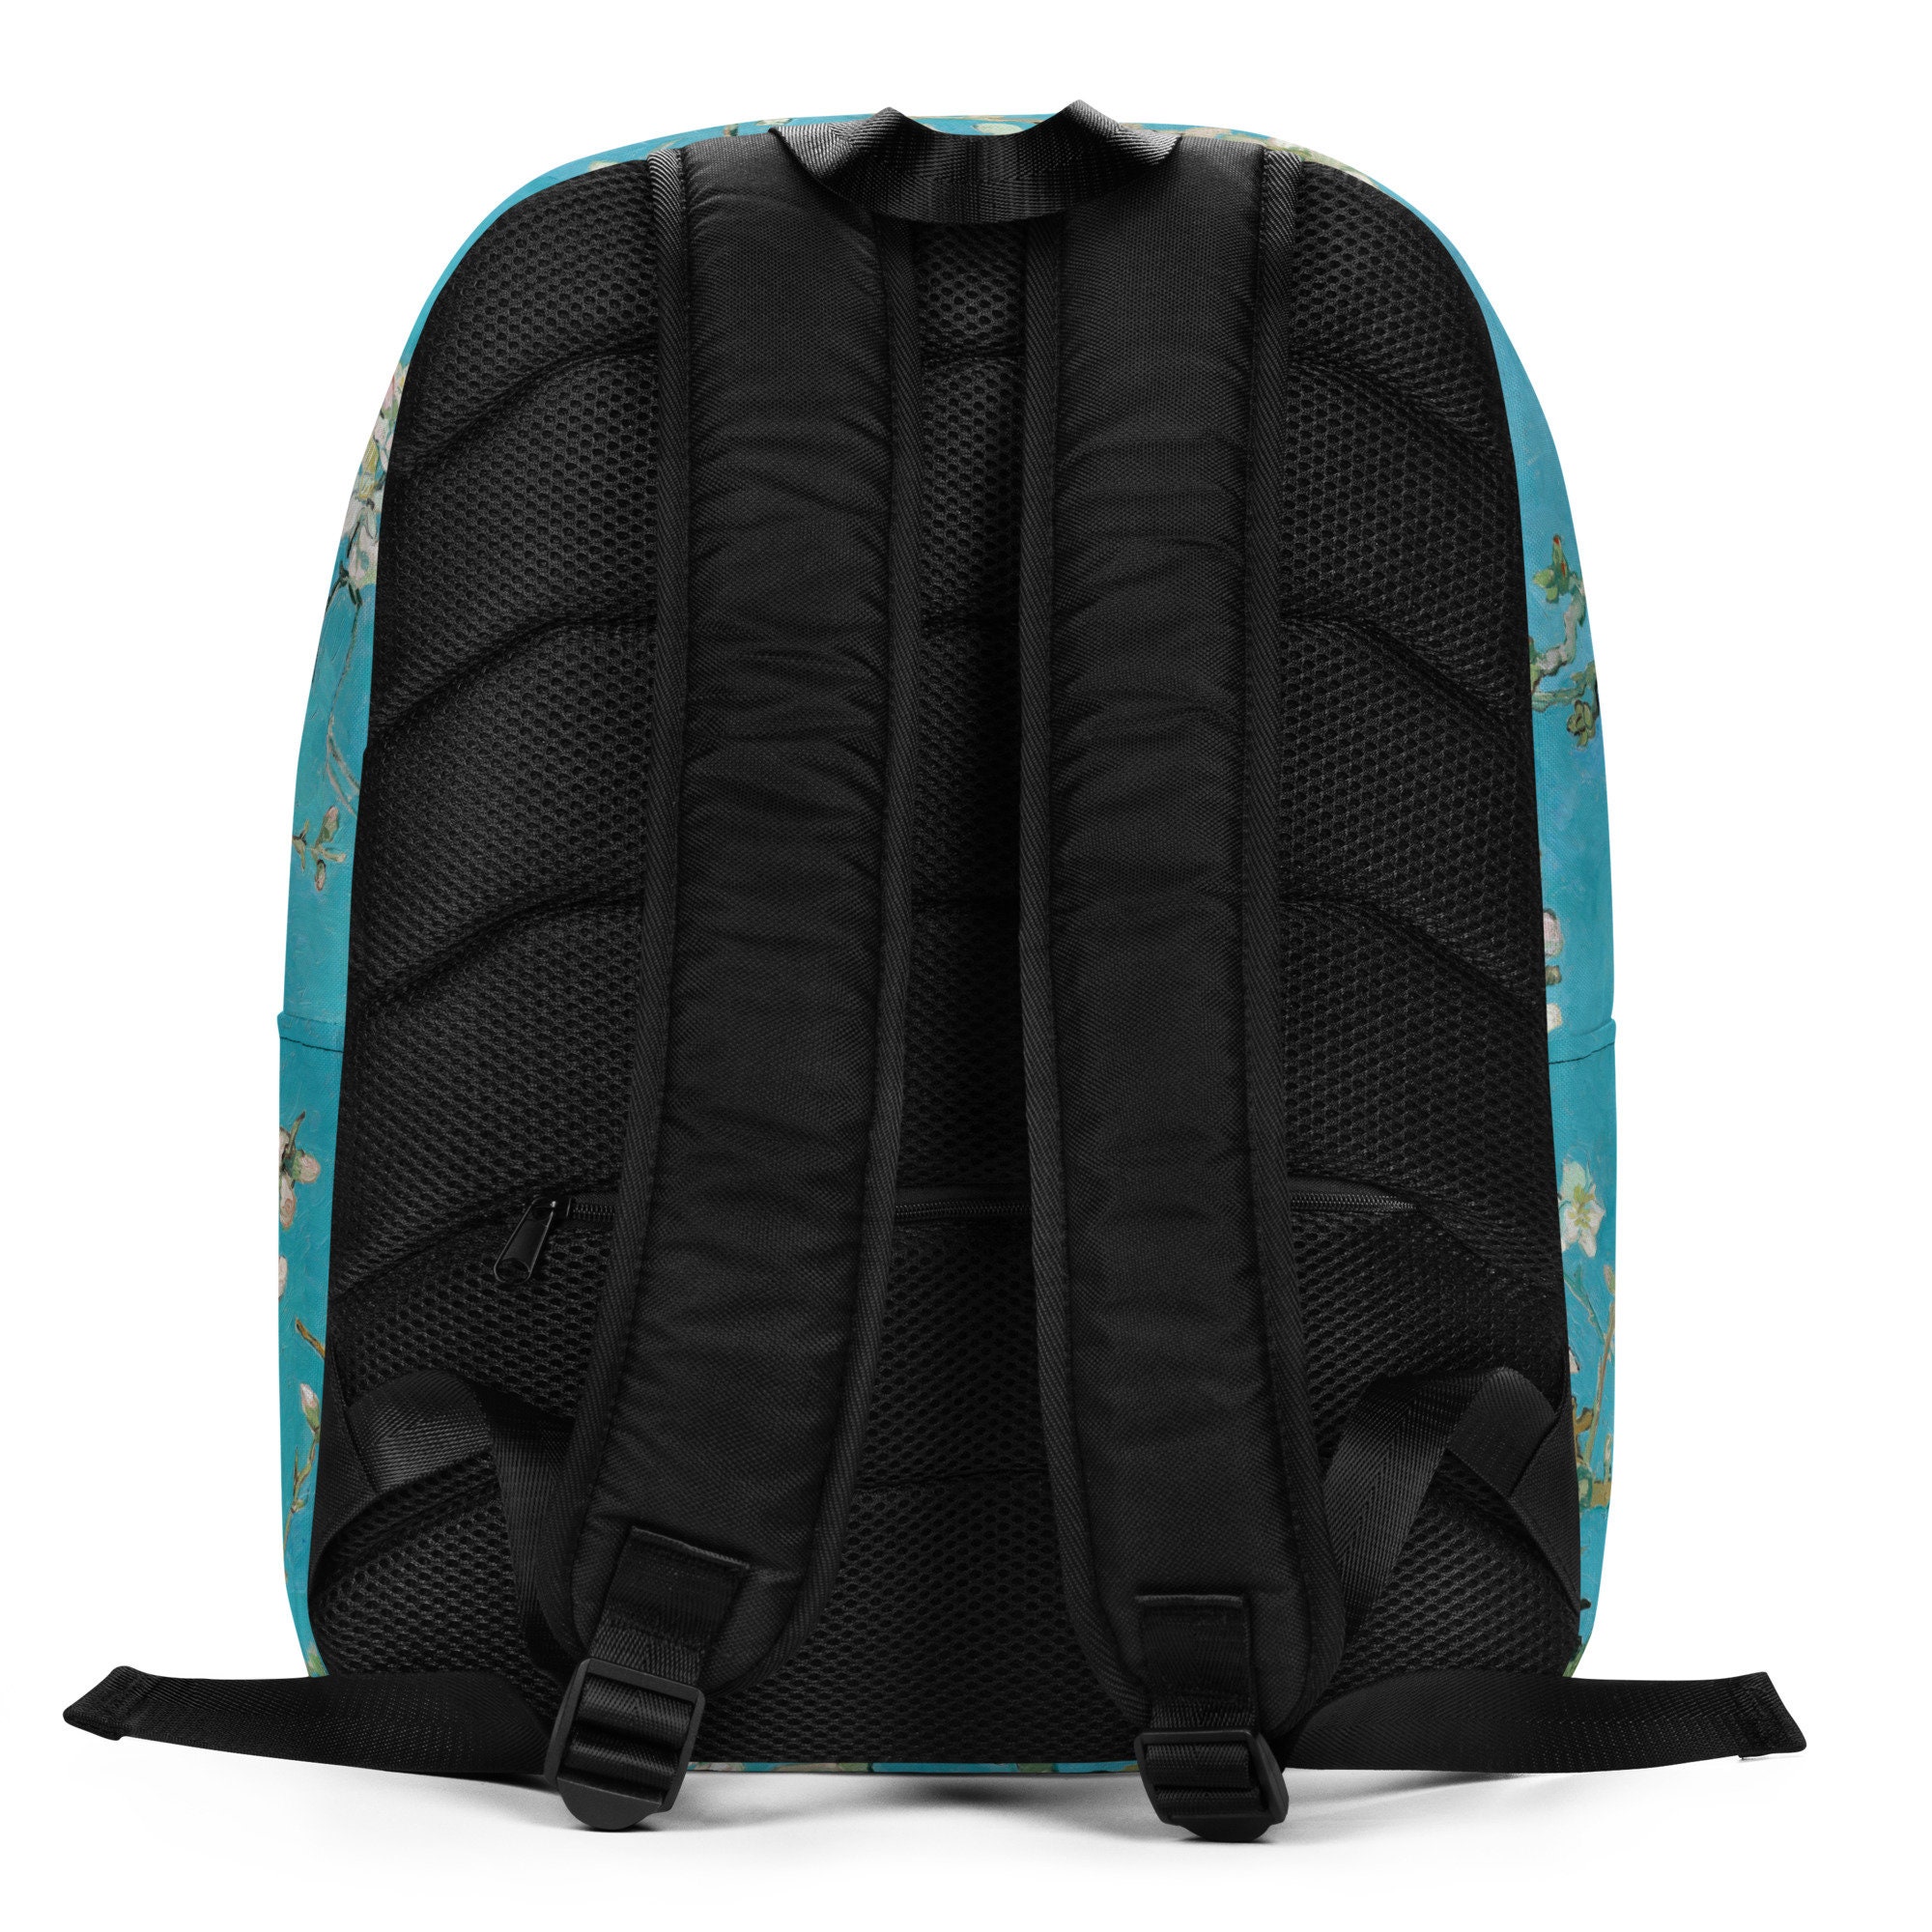 Minimalist Backpack. Vincent van Gogh, Almond Blossom - Fashion Art